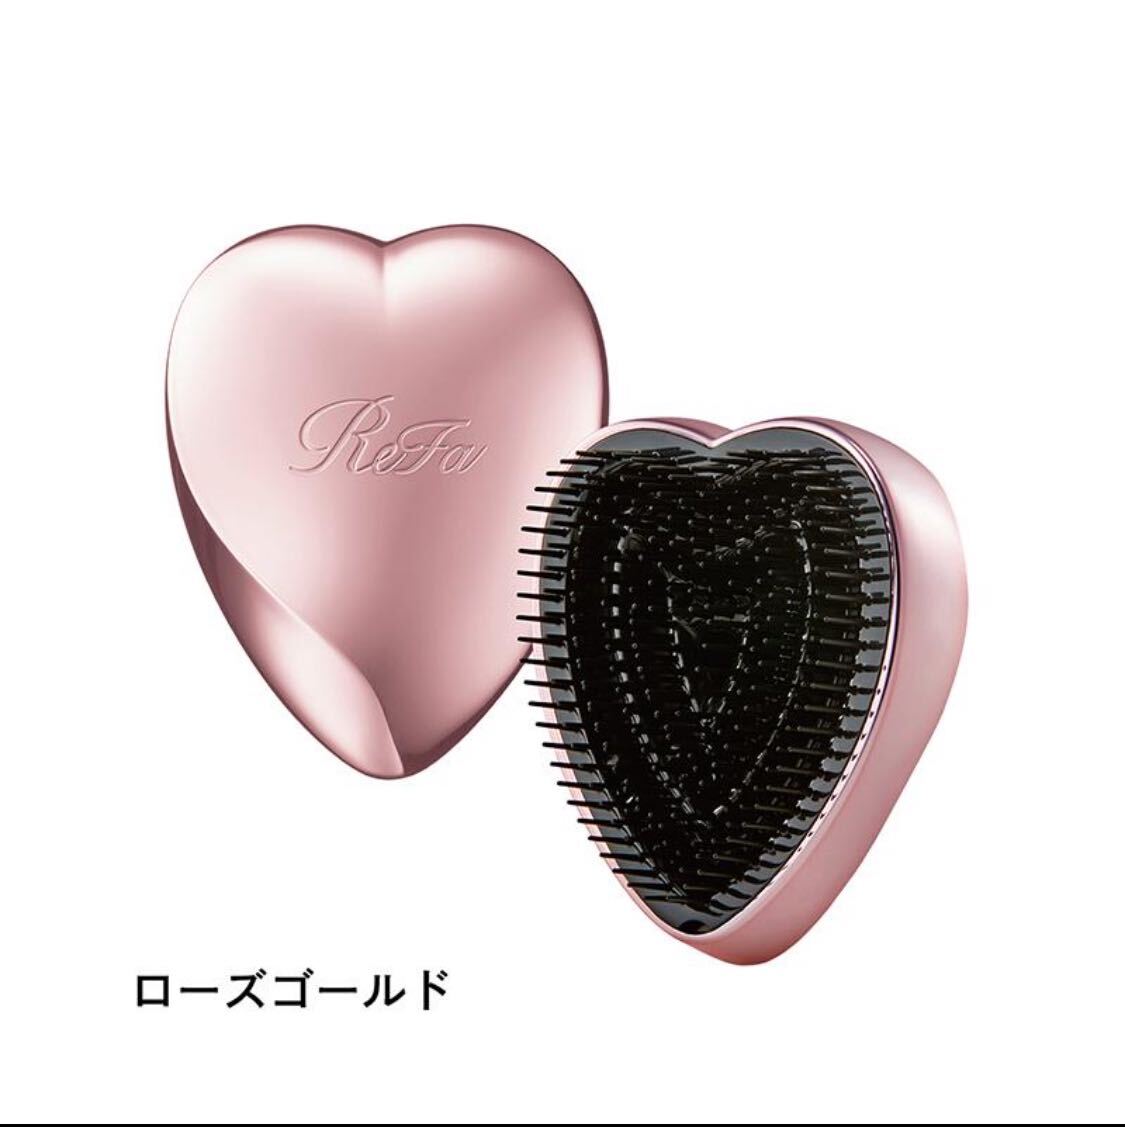 lifa Heart brush gift carrying ReFa HEART BRUSH.. wool comb brush hair brush damage scalp rose Gold 